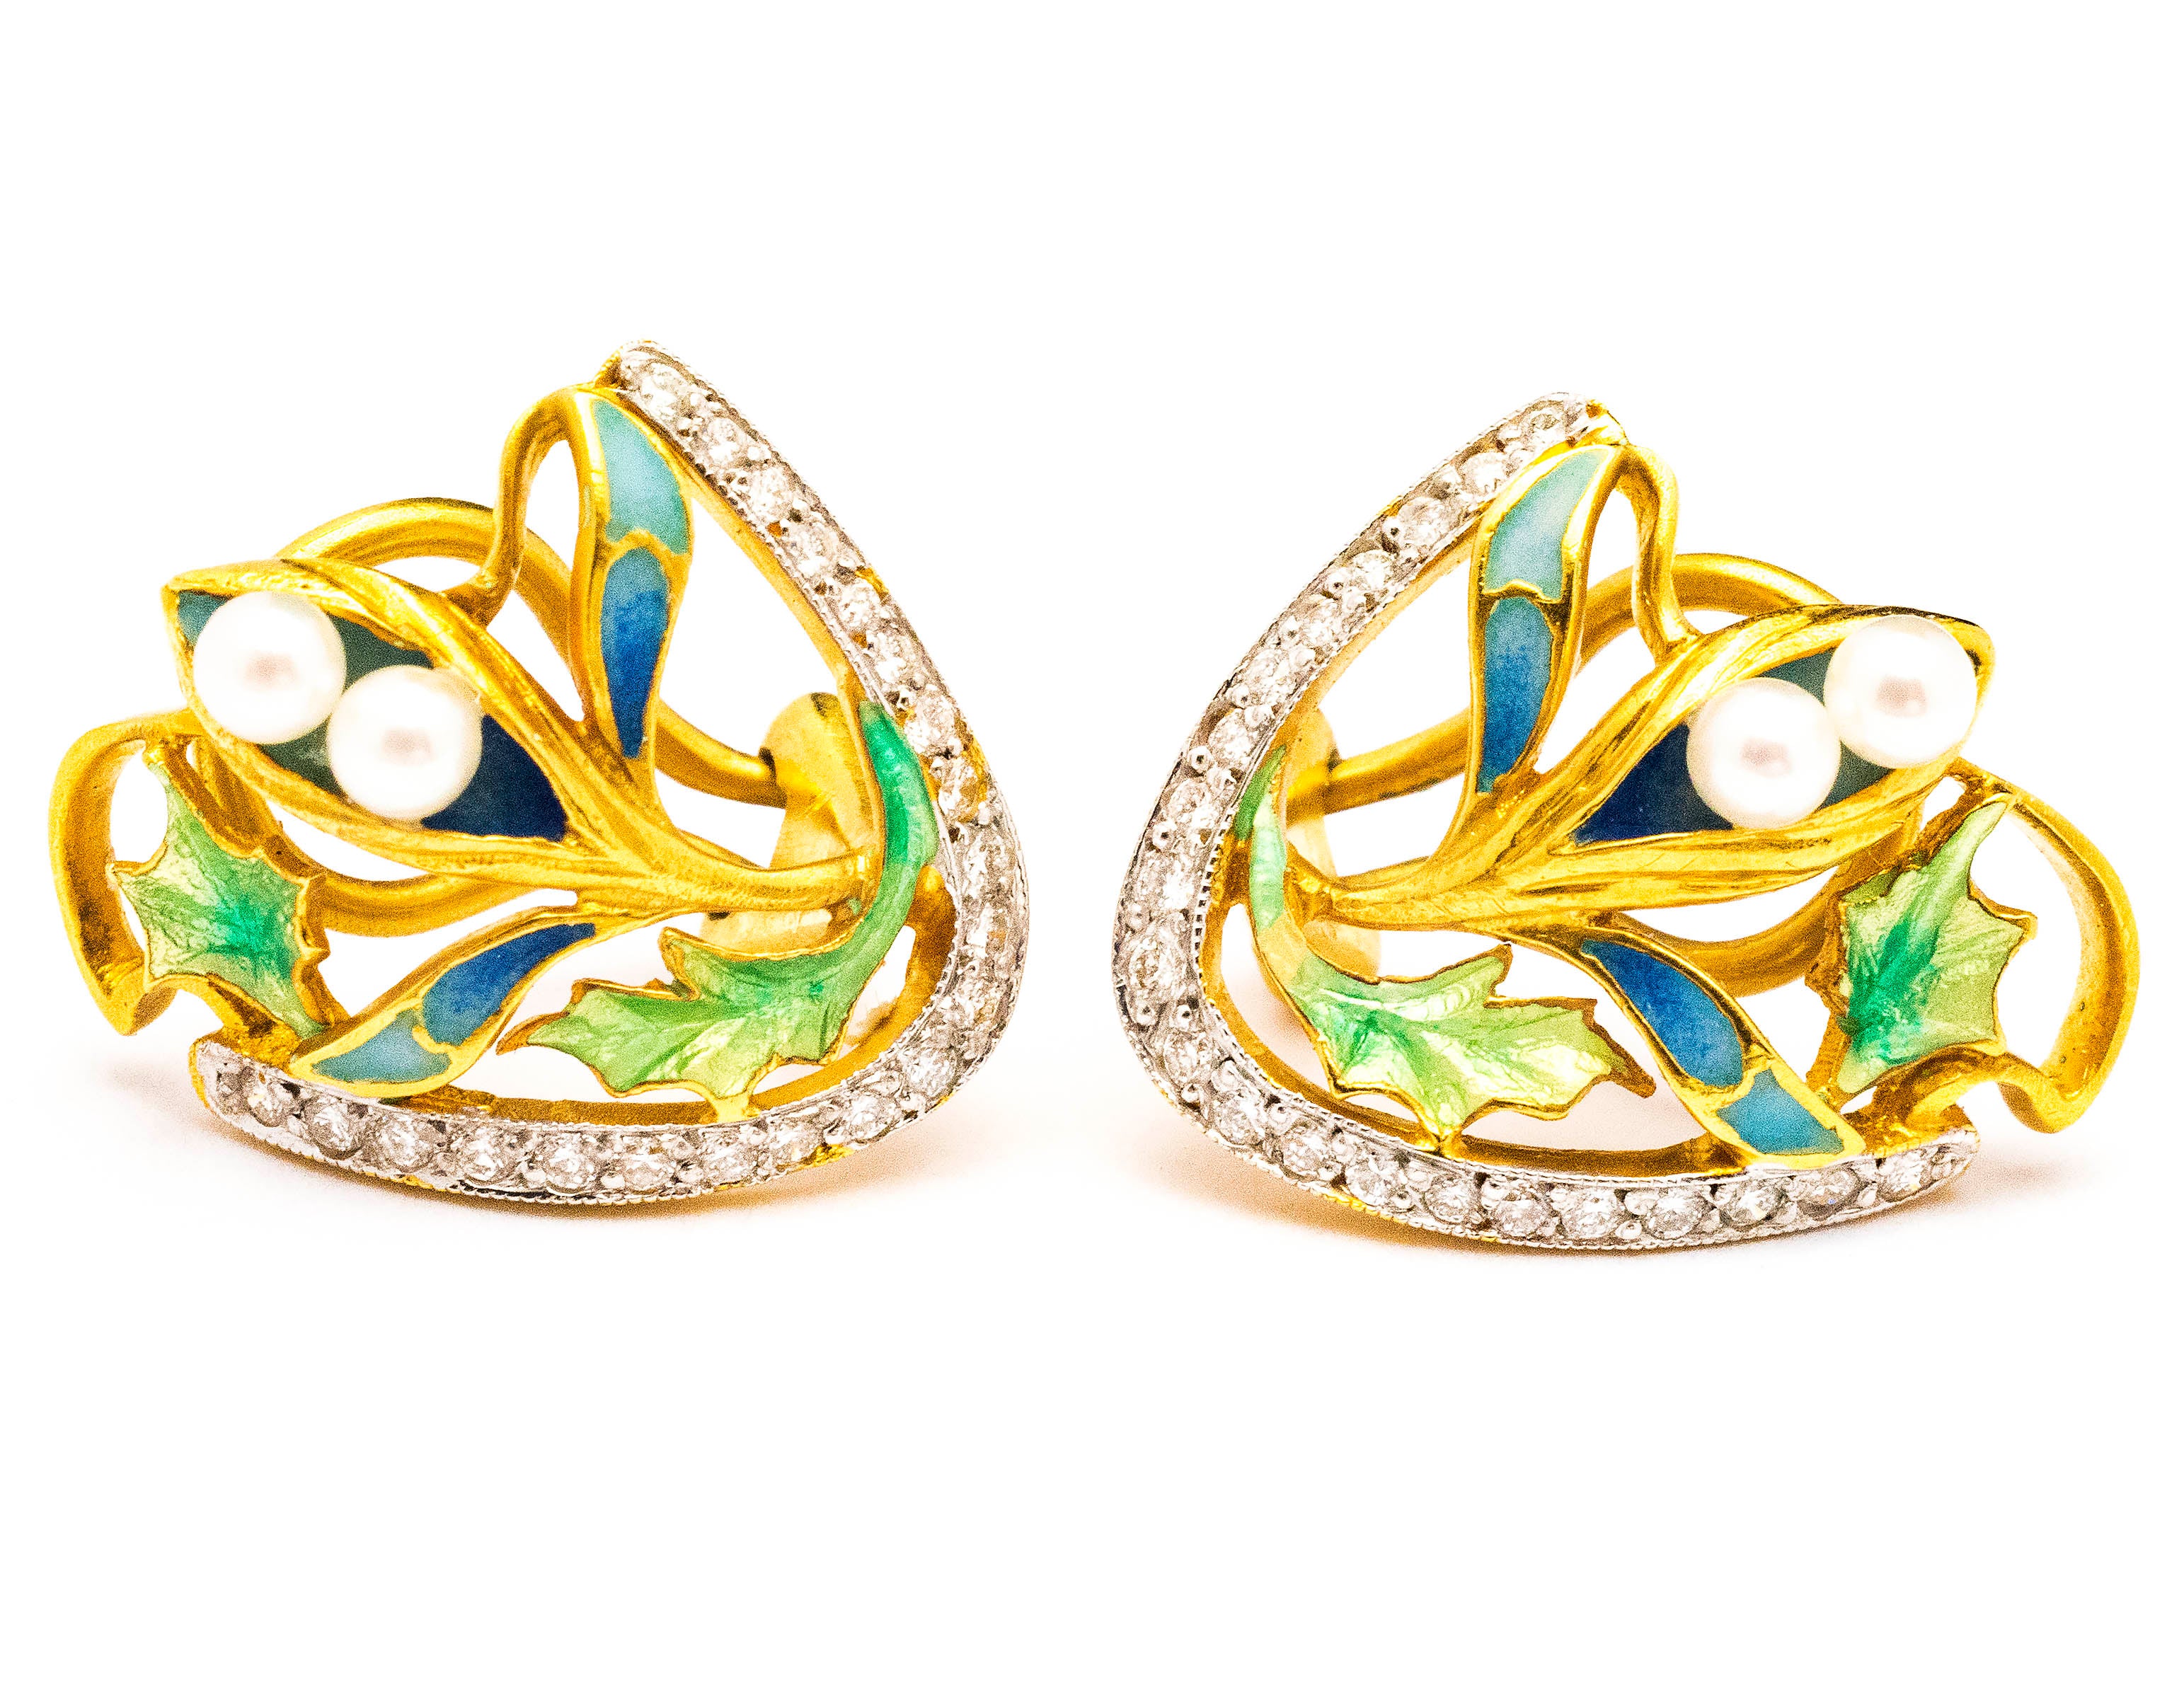 Aggregate 81+ caratlane gold earrings